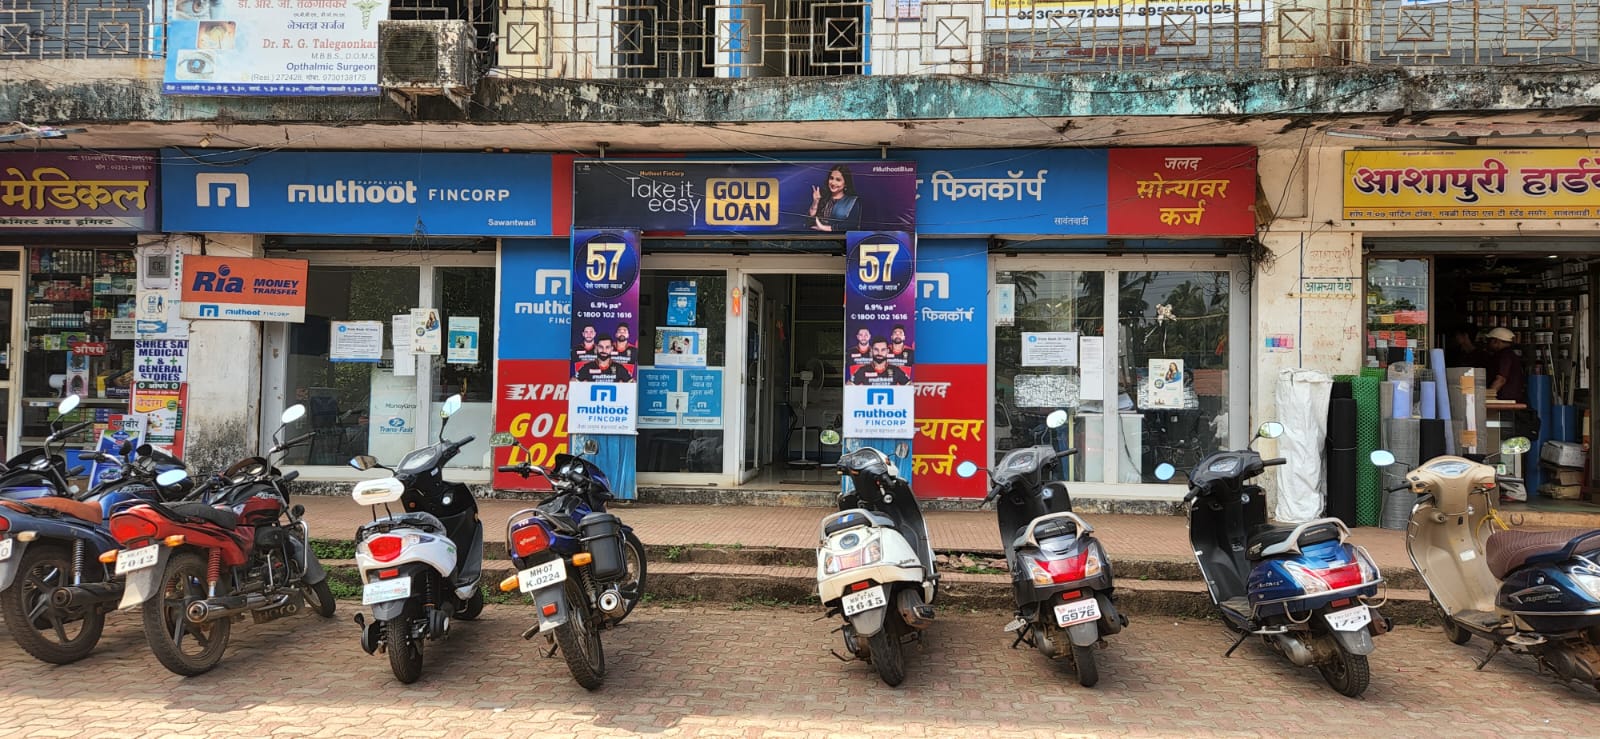 Muthoot Fincorp Gold Loan Services in Sawantwadi, Sindhudurg, Maharashtra